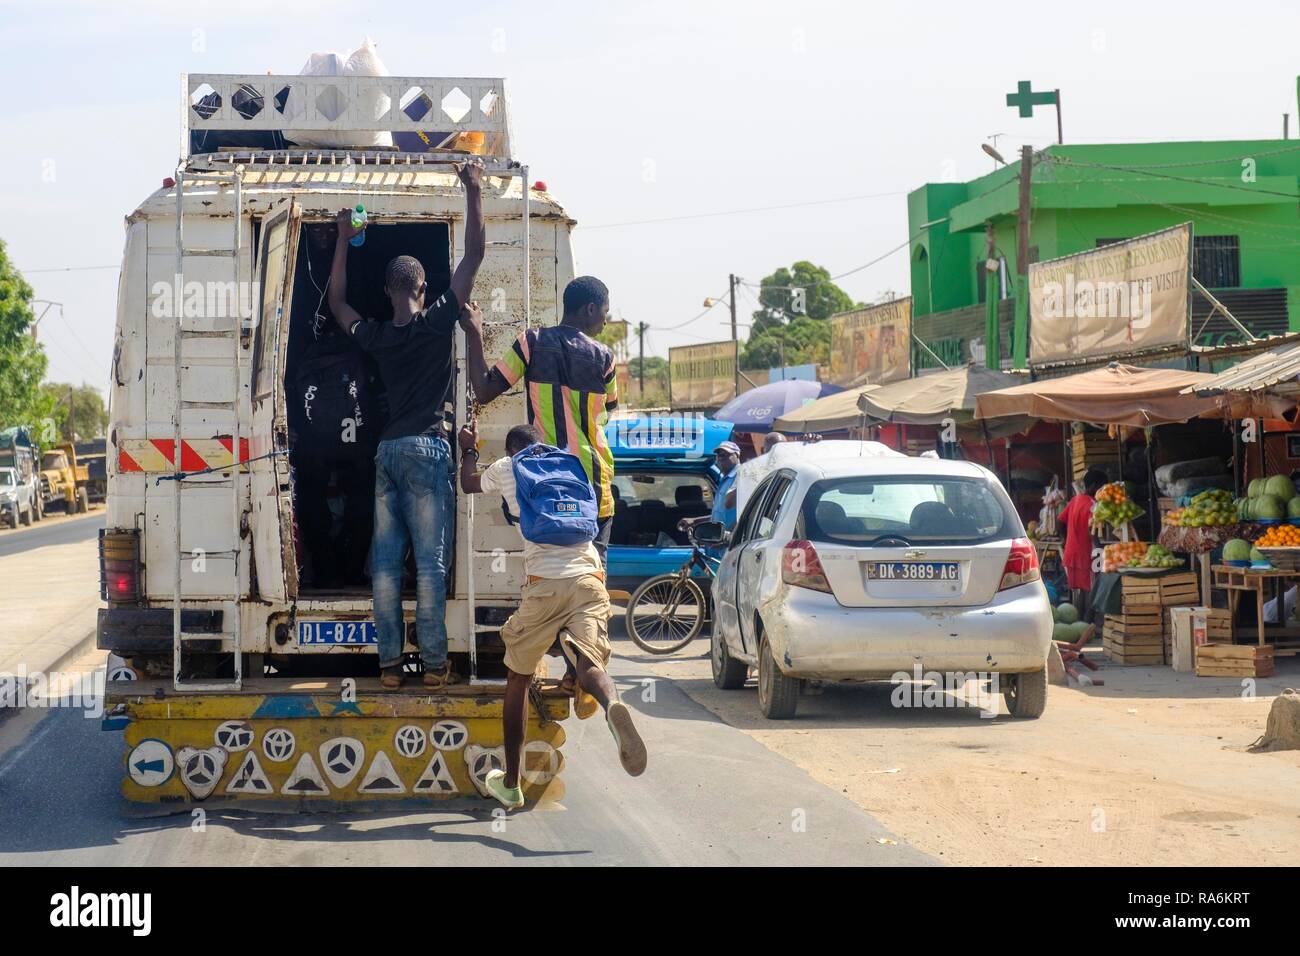 Man jumps on a bus, Dakar, Senegal Stock Photo